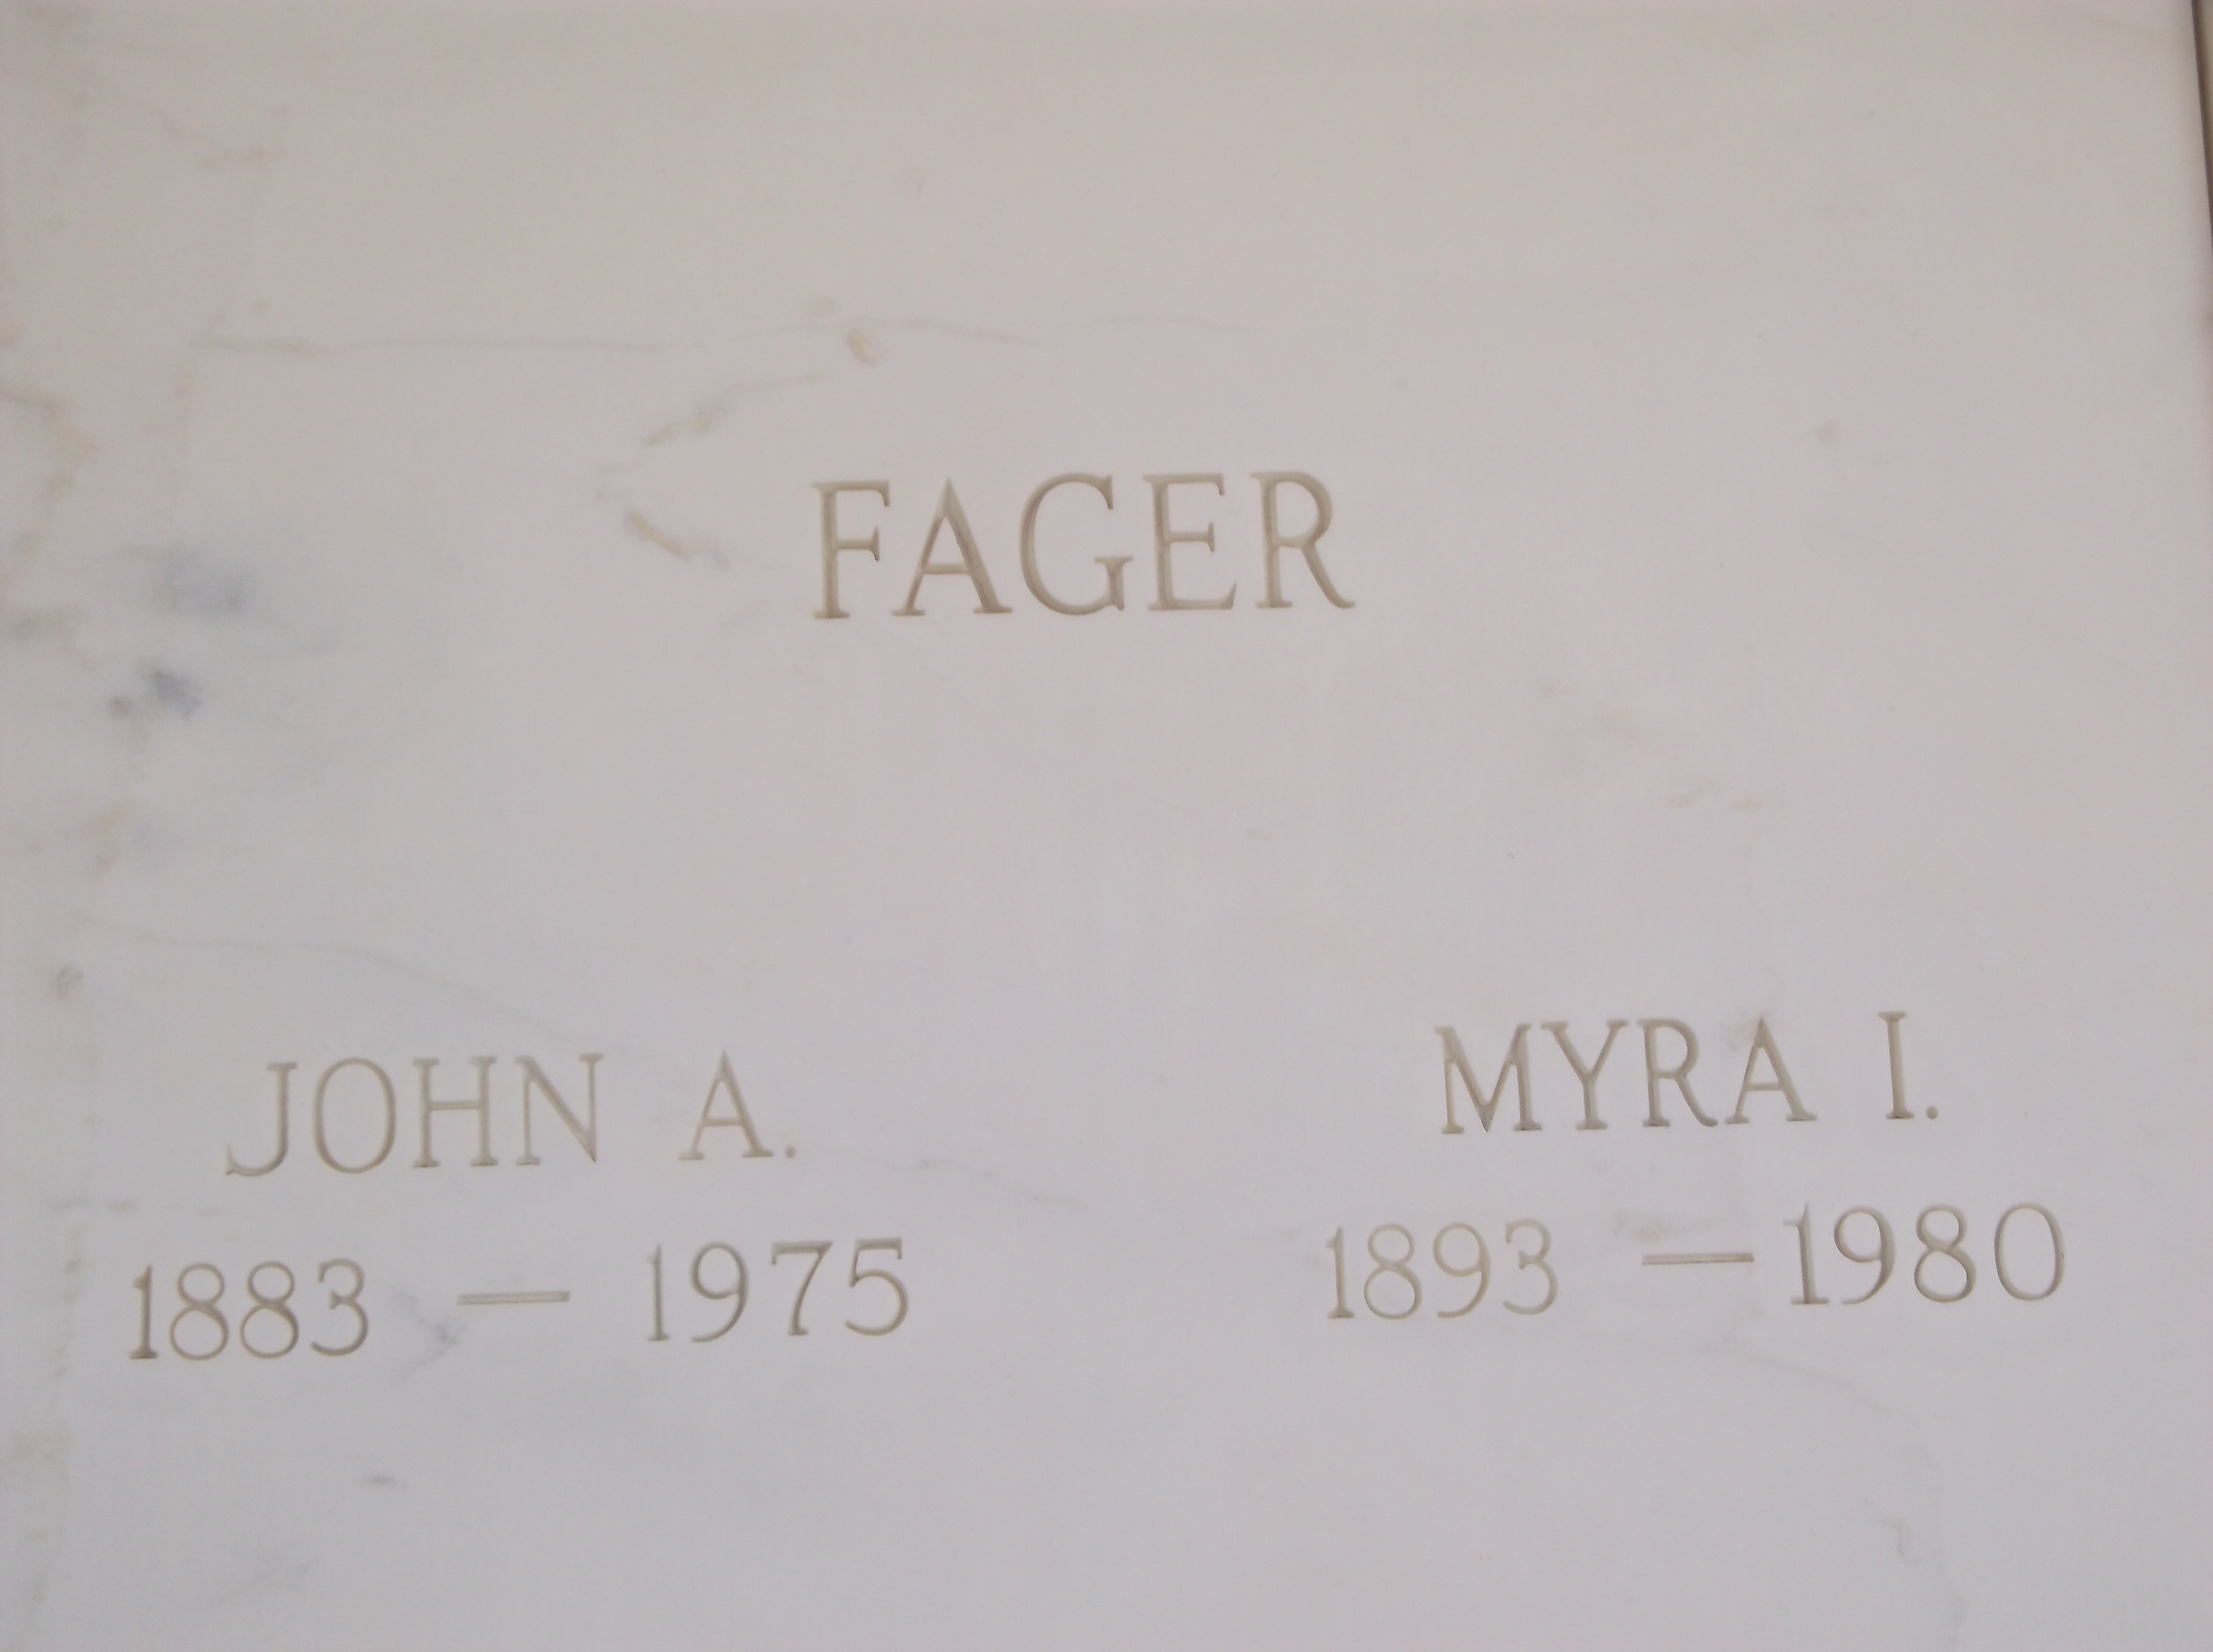 John A Fager